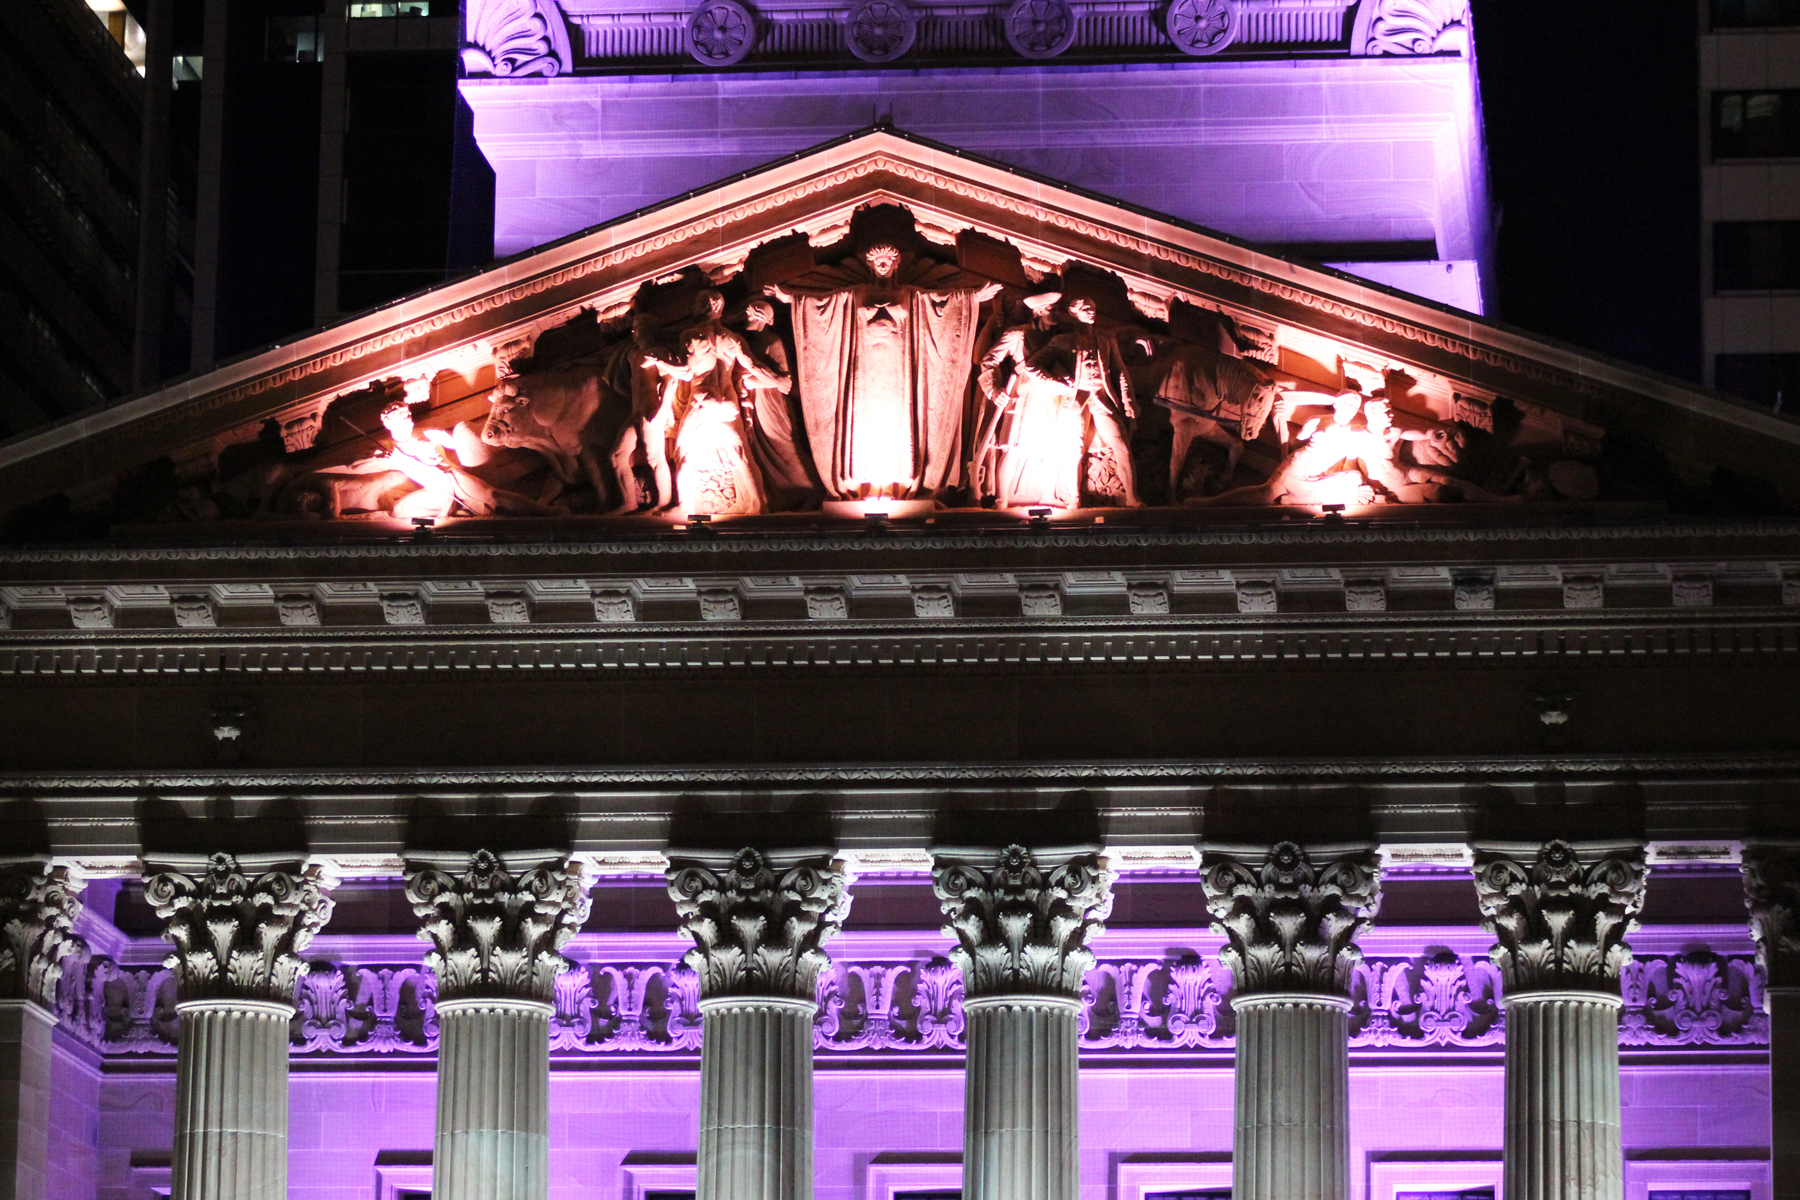 Brisbane City Hall Light Show Custom Outdoor LED Building Facade Architectural Lighting